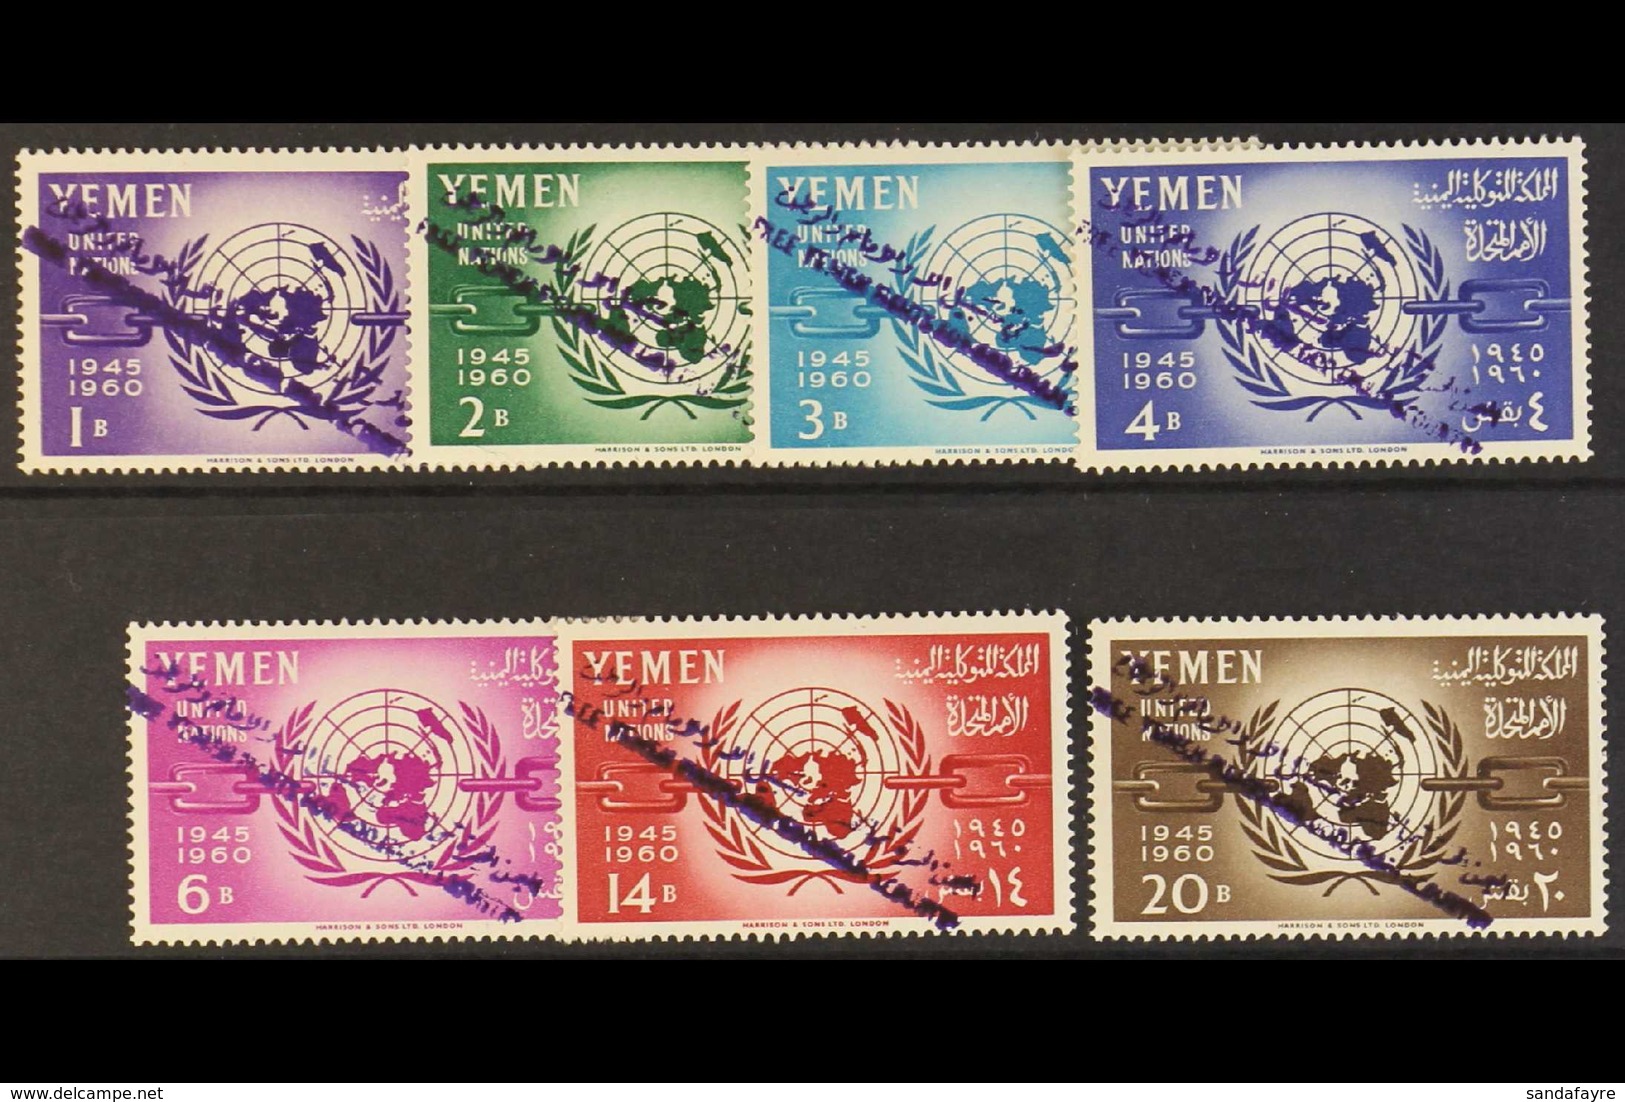 ROYALIST CIVIL WAR ISSUES 1964 17th Anniv Of UN Set Ovptd "Free Yemen Fights For God Etc" 2 Lines In Violet, Variety IMP - Yemen